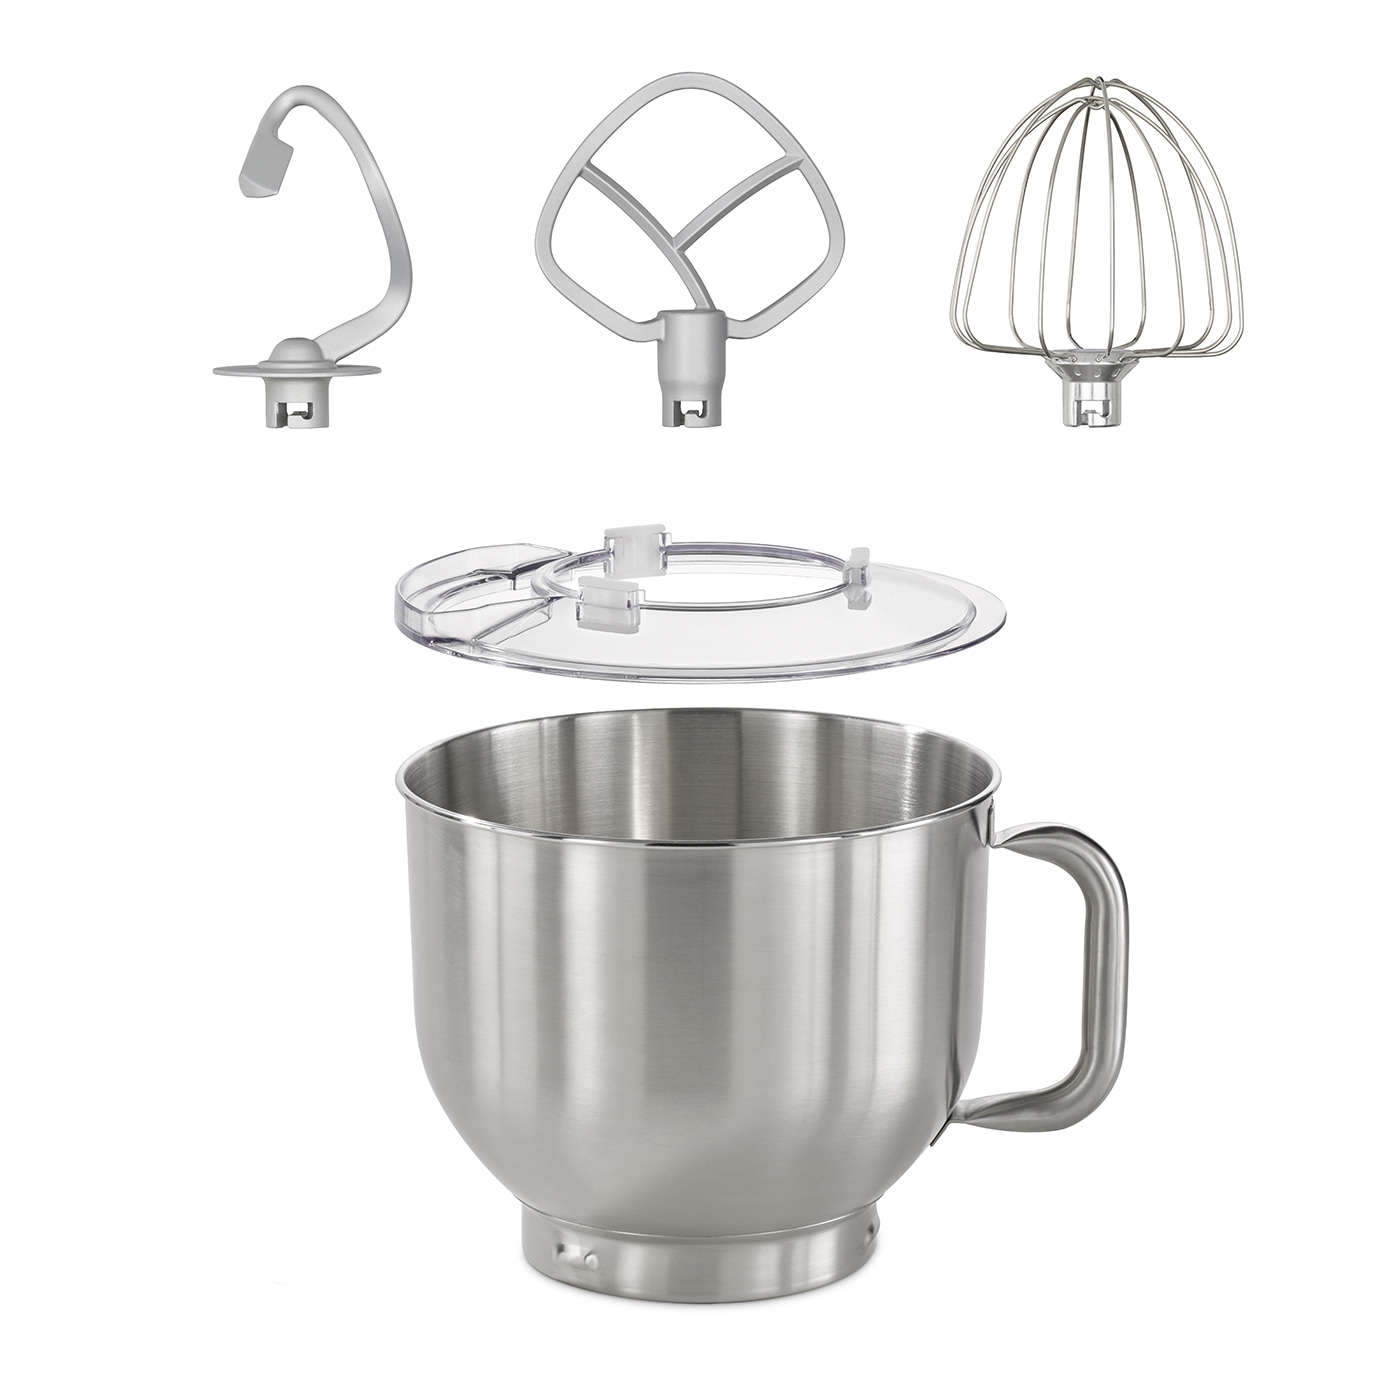 Чаша для блендера CASO Pot E for KM 1800 чаша стальная для кухонного комбайна caso km 1800